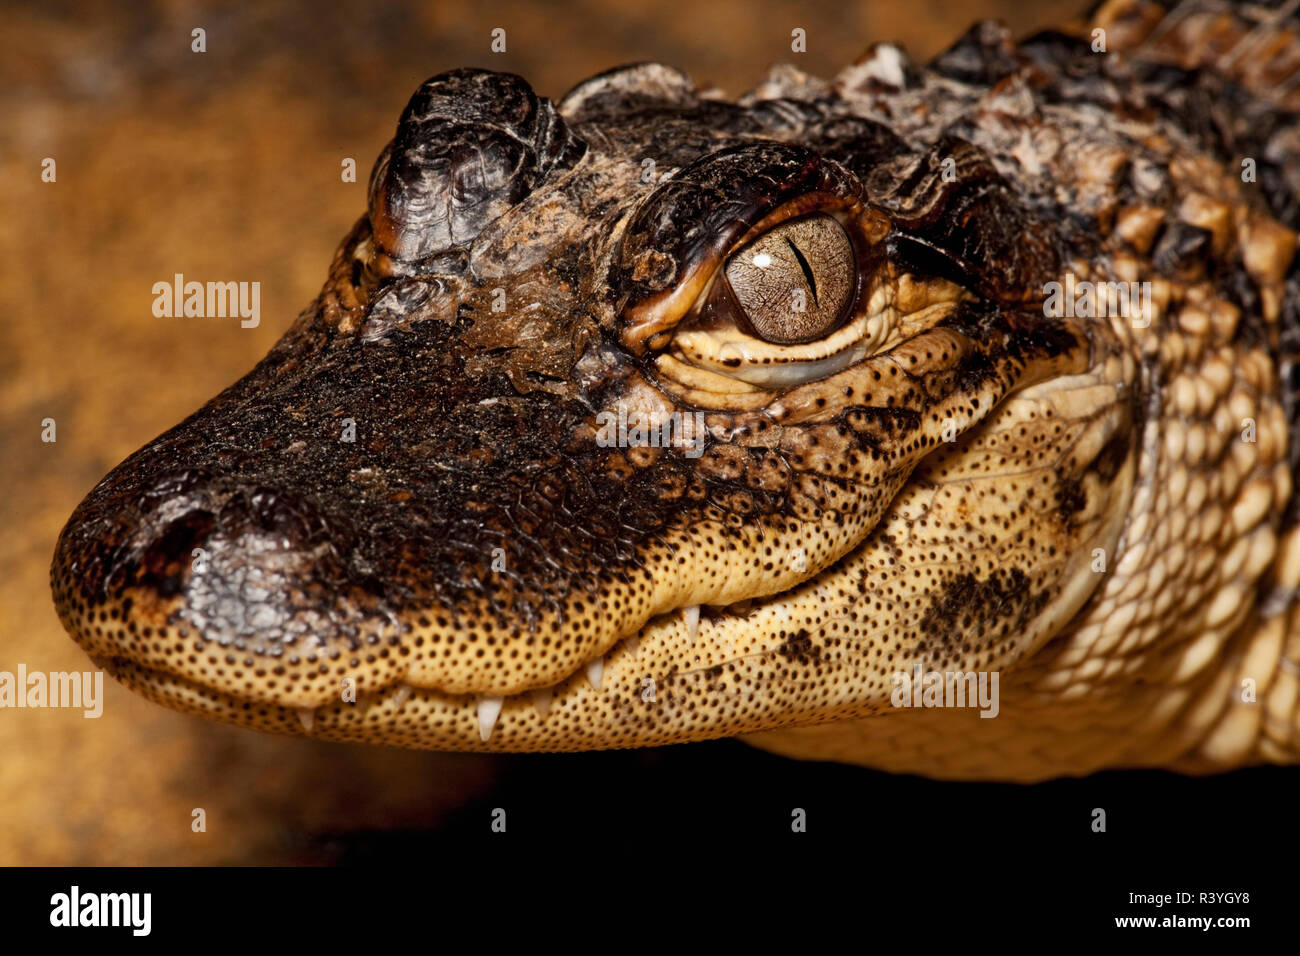 USA, Florida. Juvenile American alligator close-up. Stock Photo